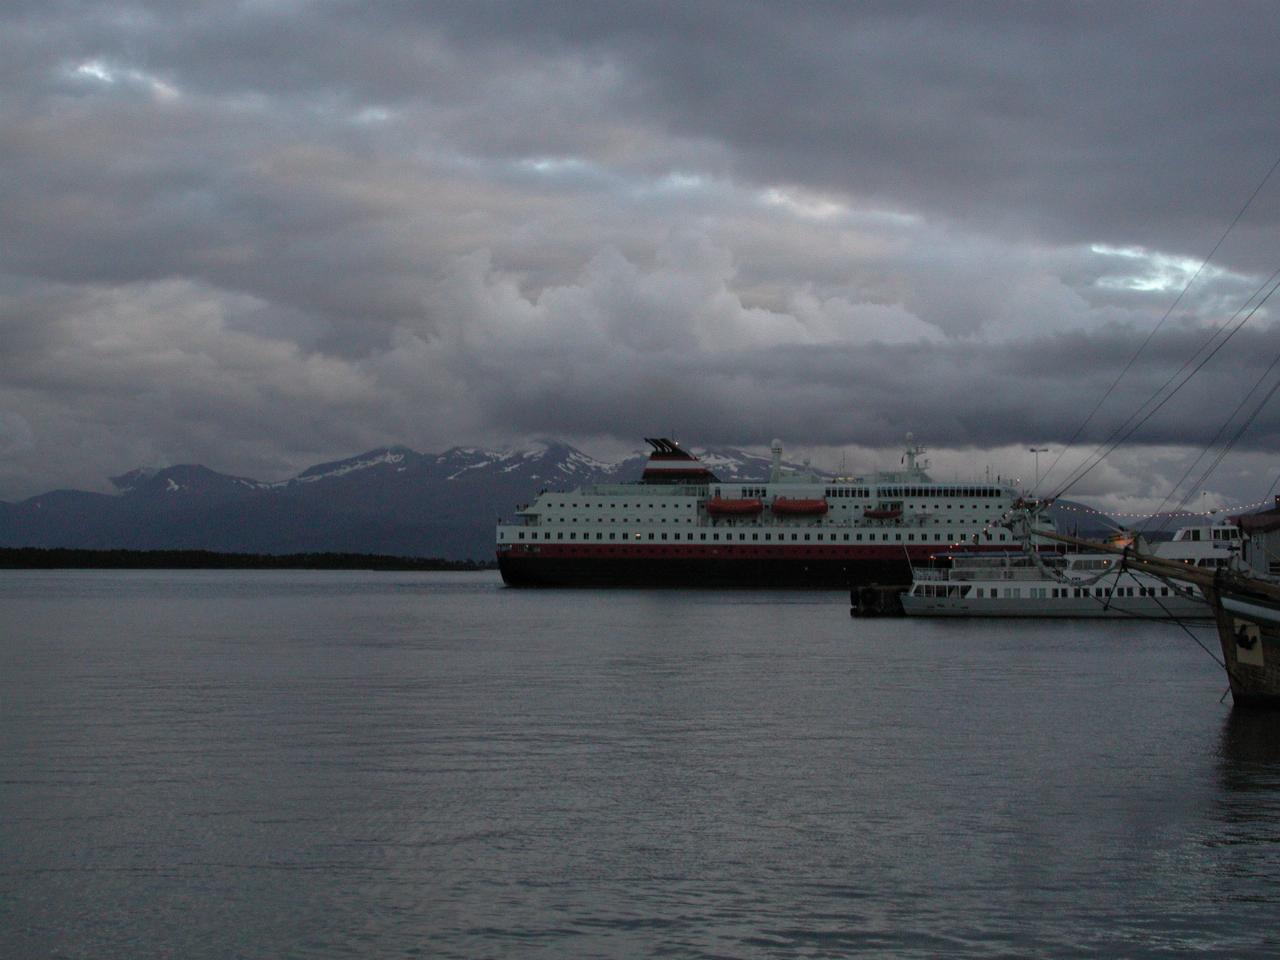 KPLU Viking Jazz: Coastal ferry at Molde wharf maneuvering away from wharf